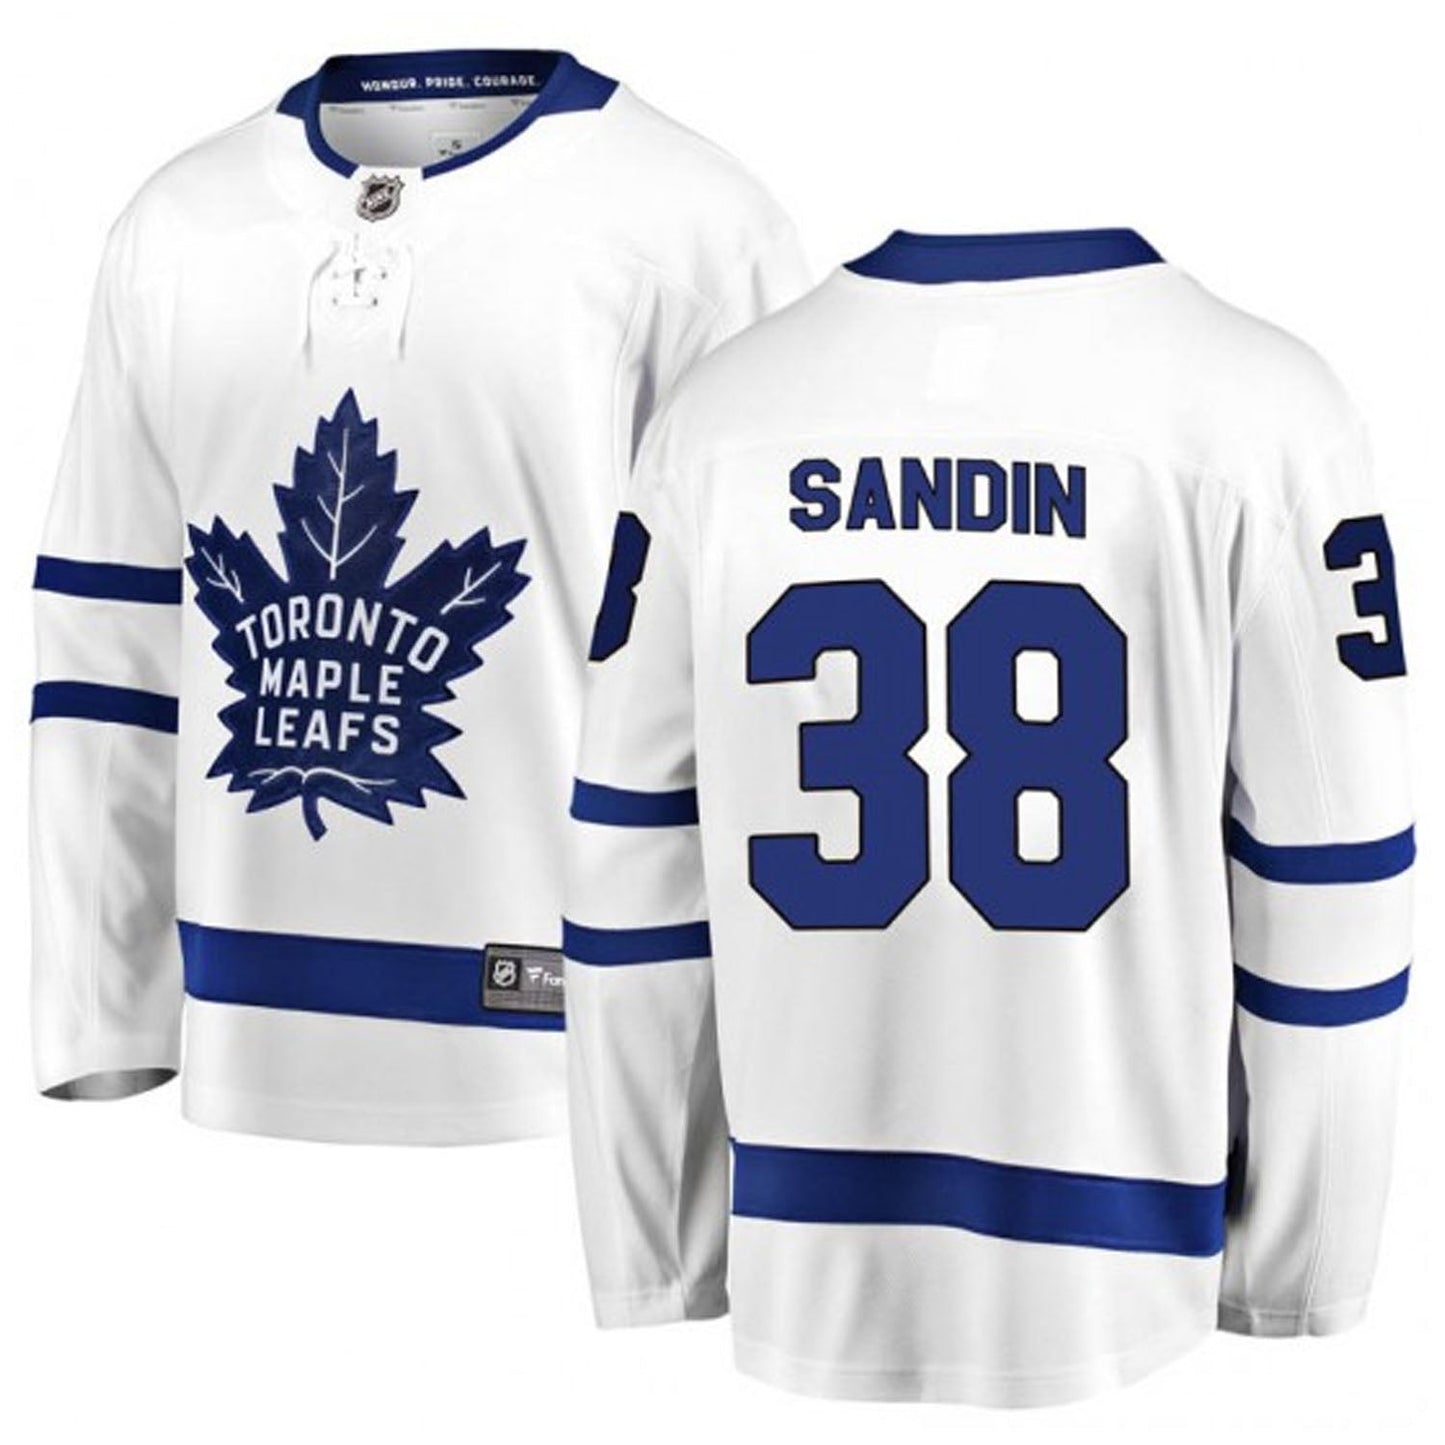 NHL Rasmus Sandin Toronto Maple Leafs 38 Jersey